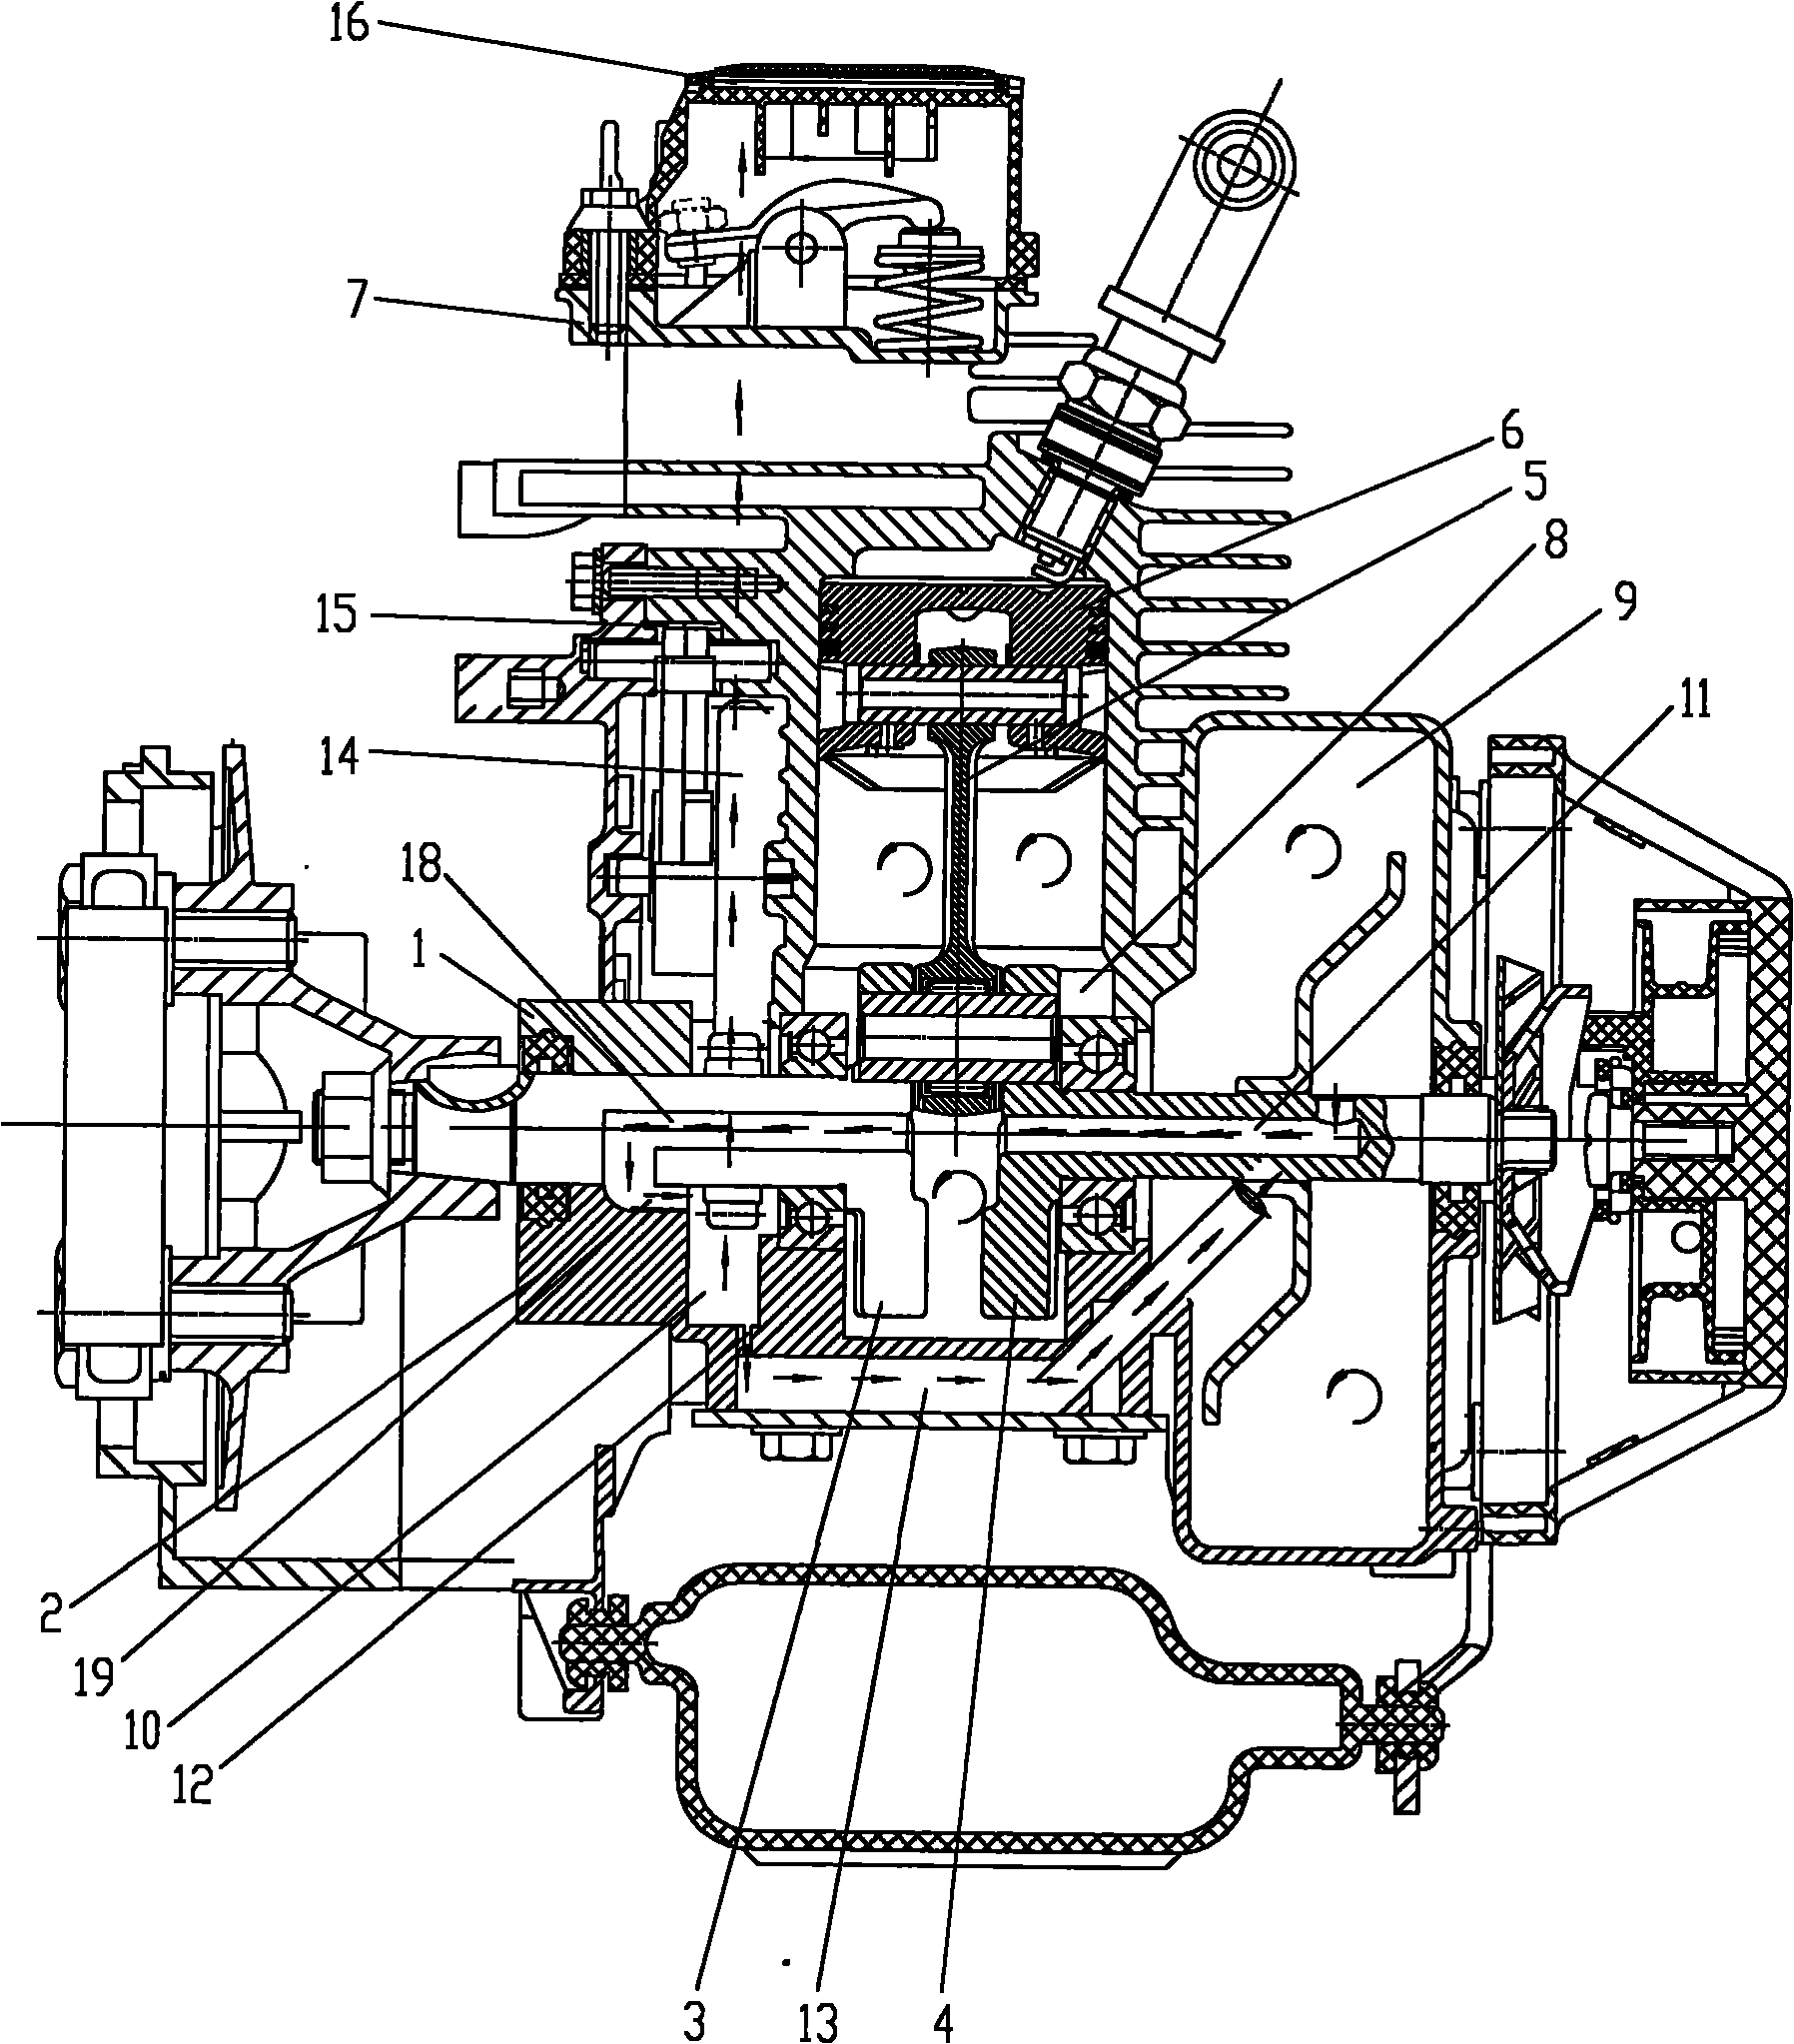 Gasoline engine lubricating structure